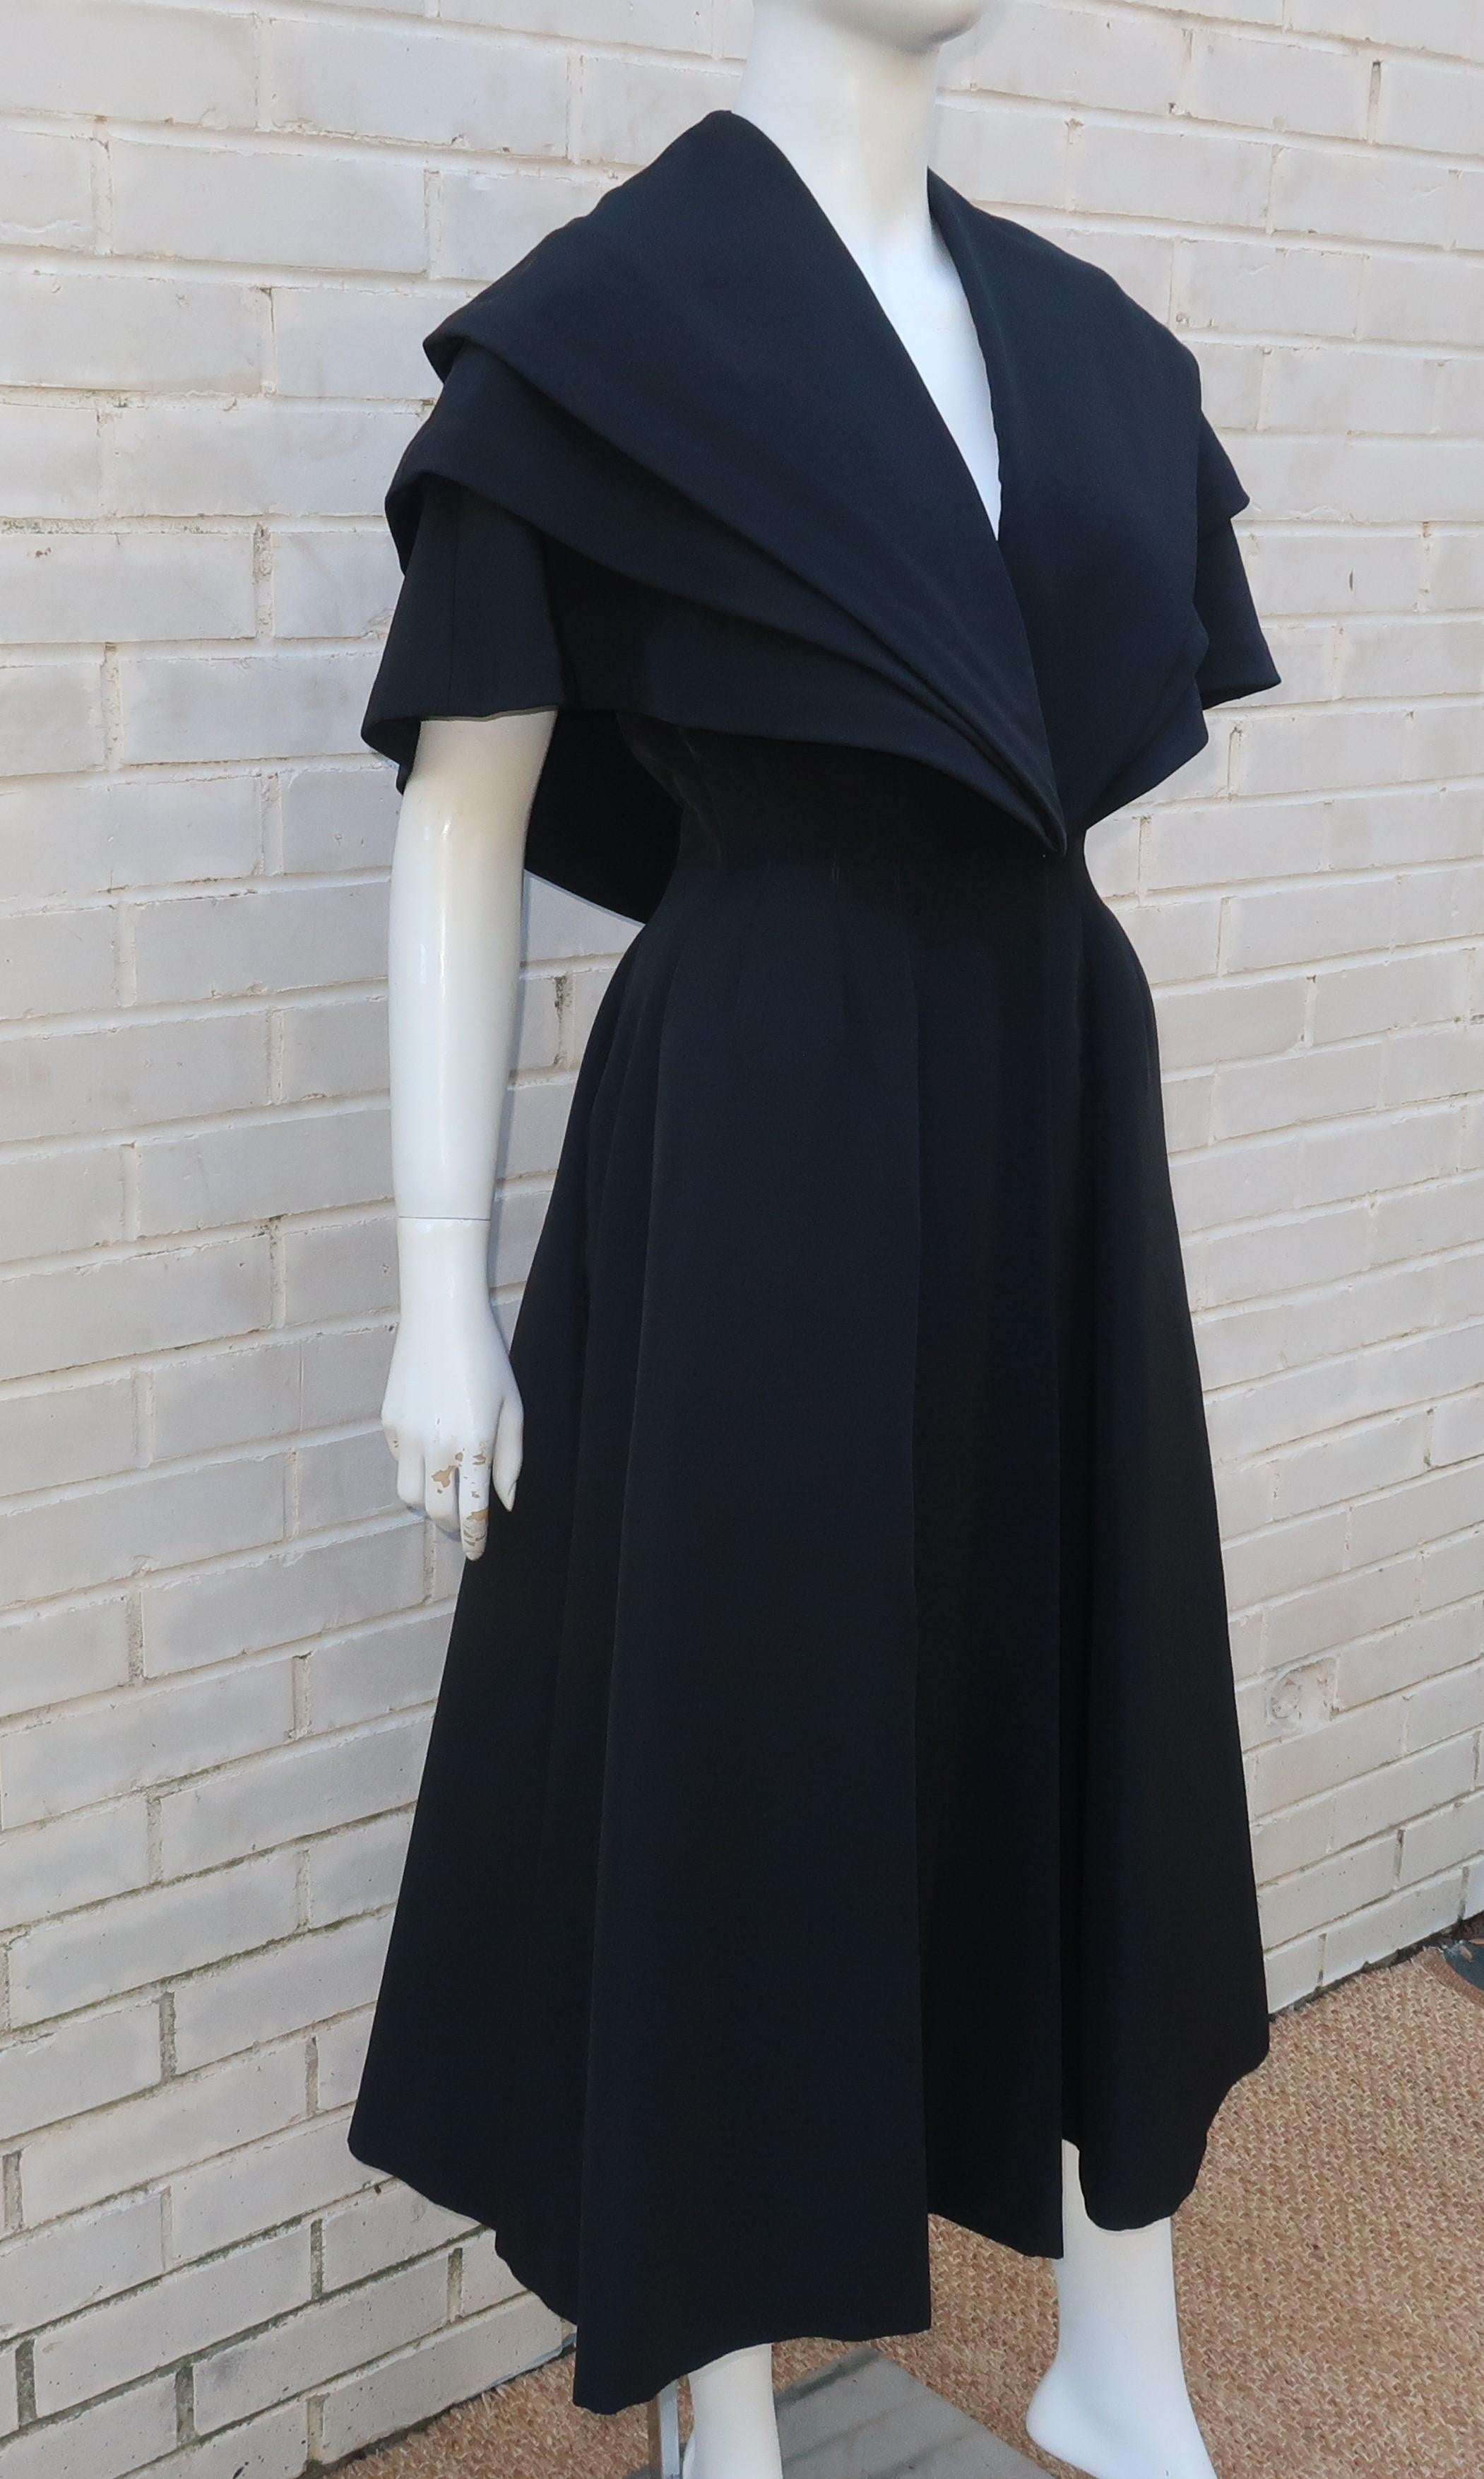 Bonwit Teller 'New Look' Black Silk Faille Evening Coat Dress, C.1950 In Good Condition In Atlanta, GA